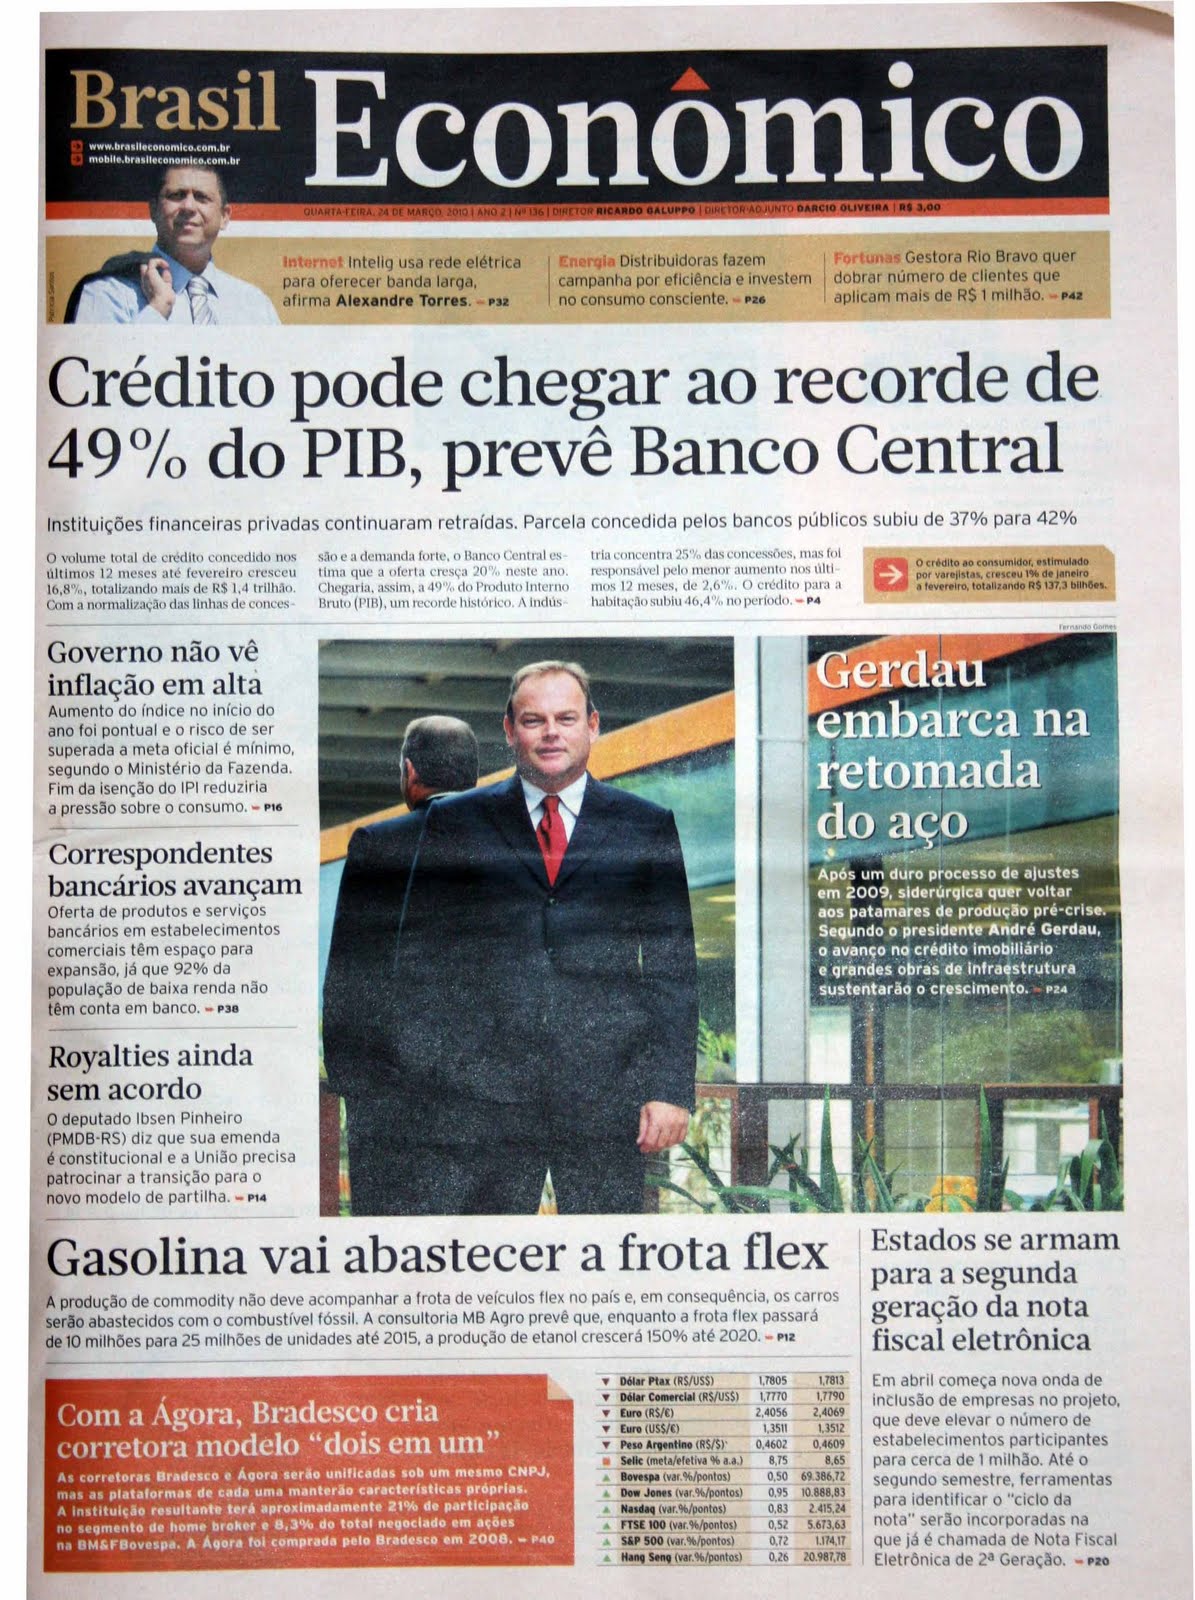 Brasil Econômico dead